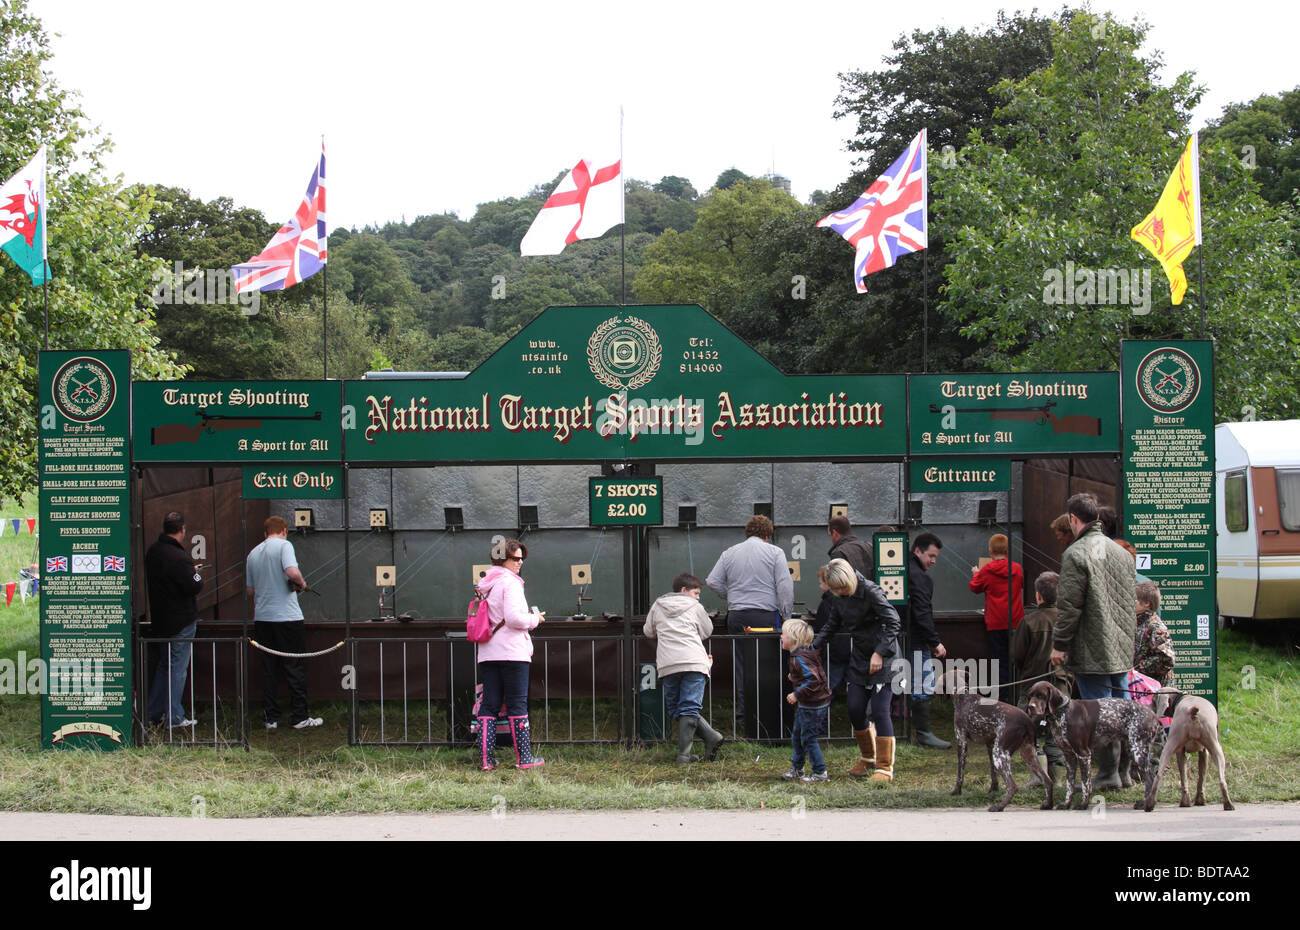 The National Target Sports Association shooting range at the Chatsworth Show, Chatsworth, Derbyshire, England, U.K. Stock Photo